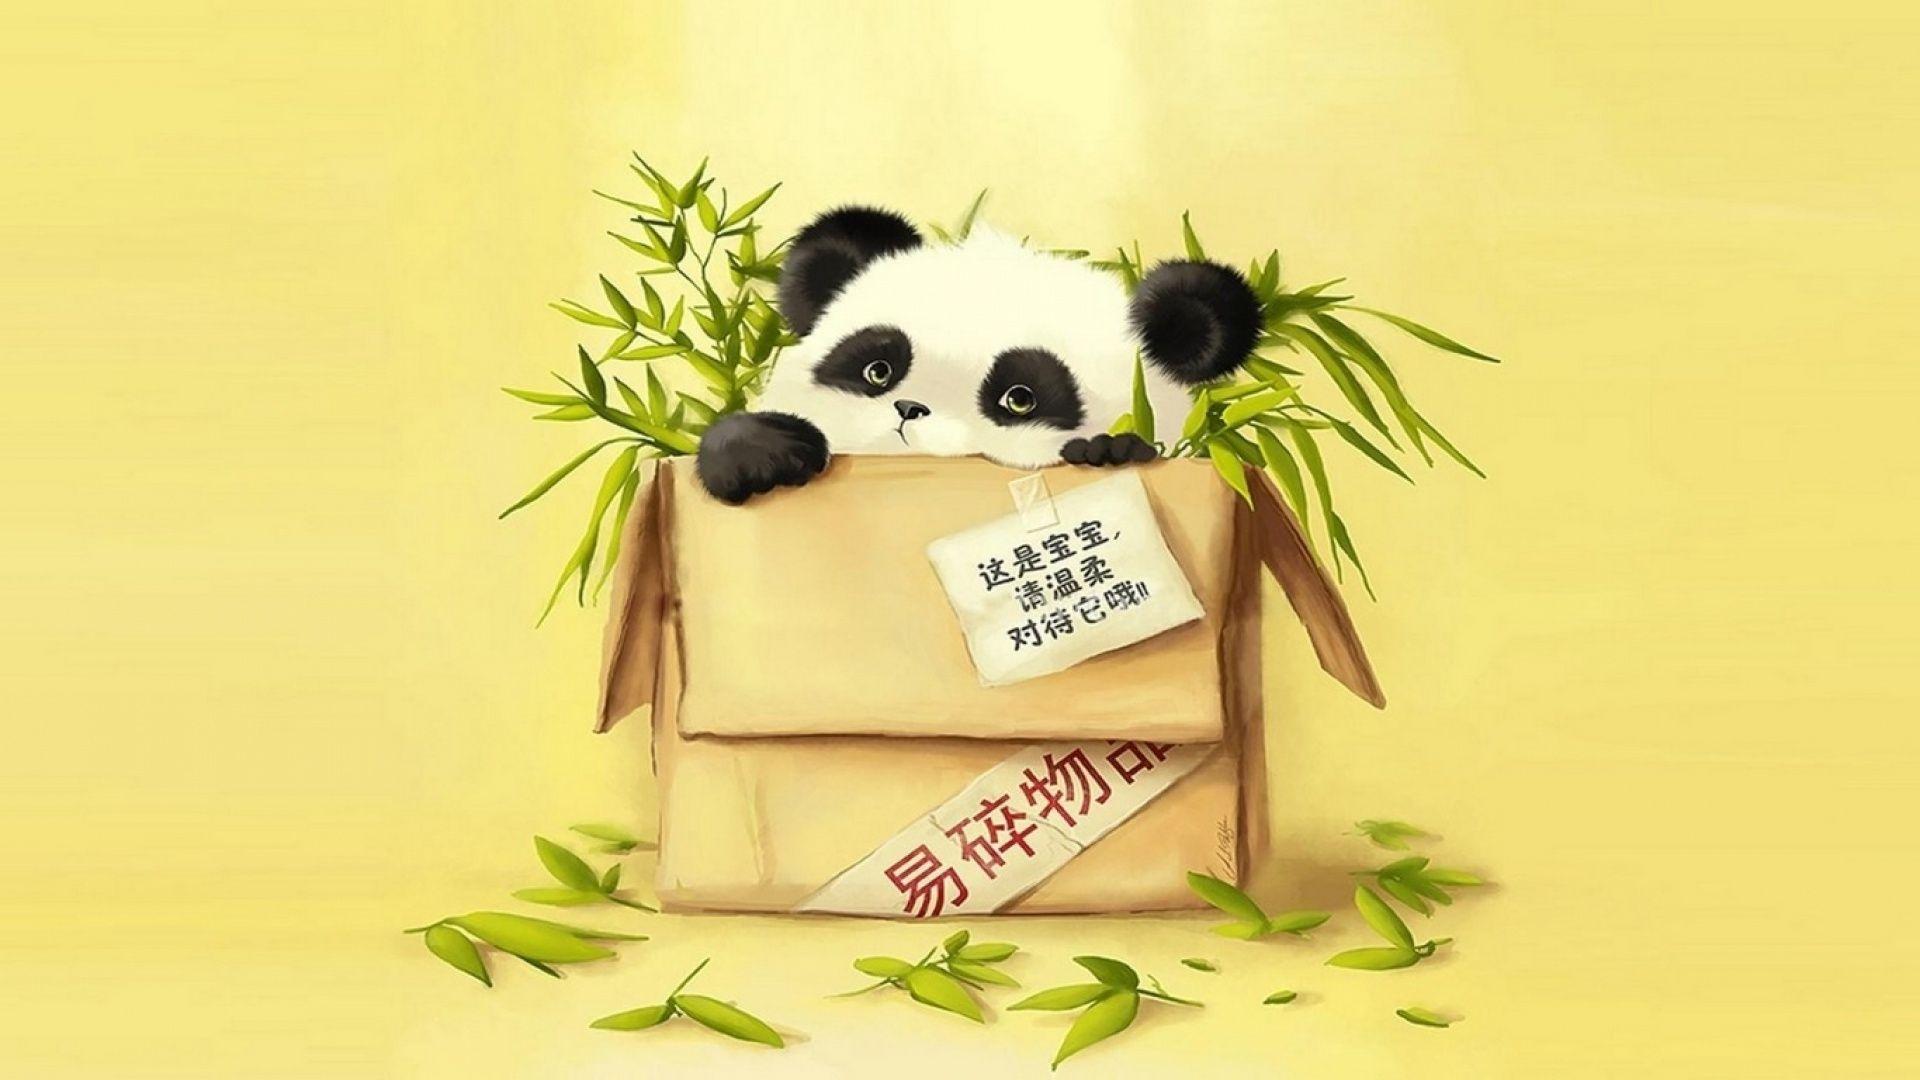 Cute Baby Panda Wallpaper Group (59)